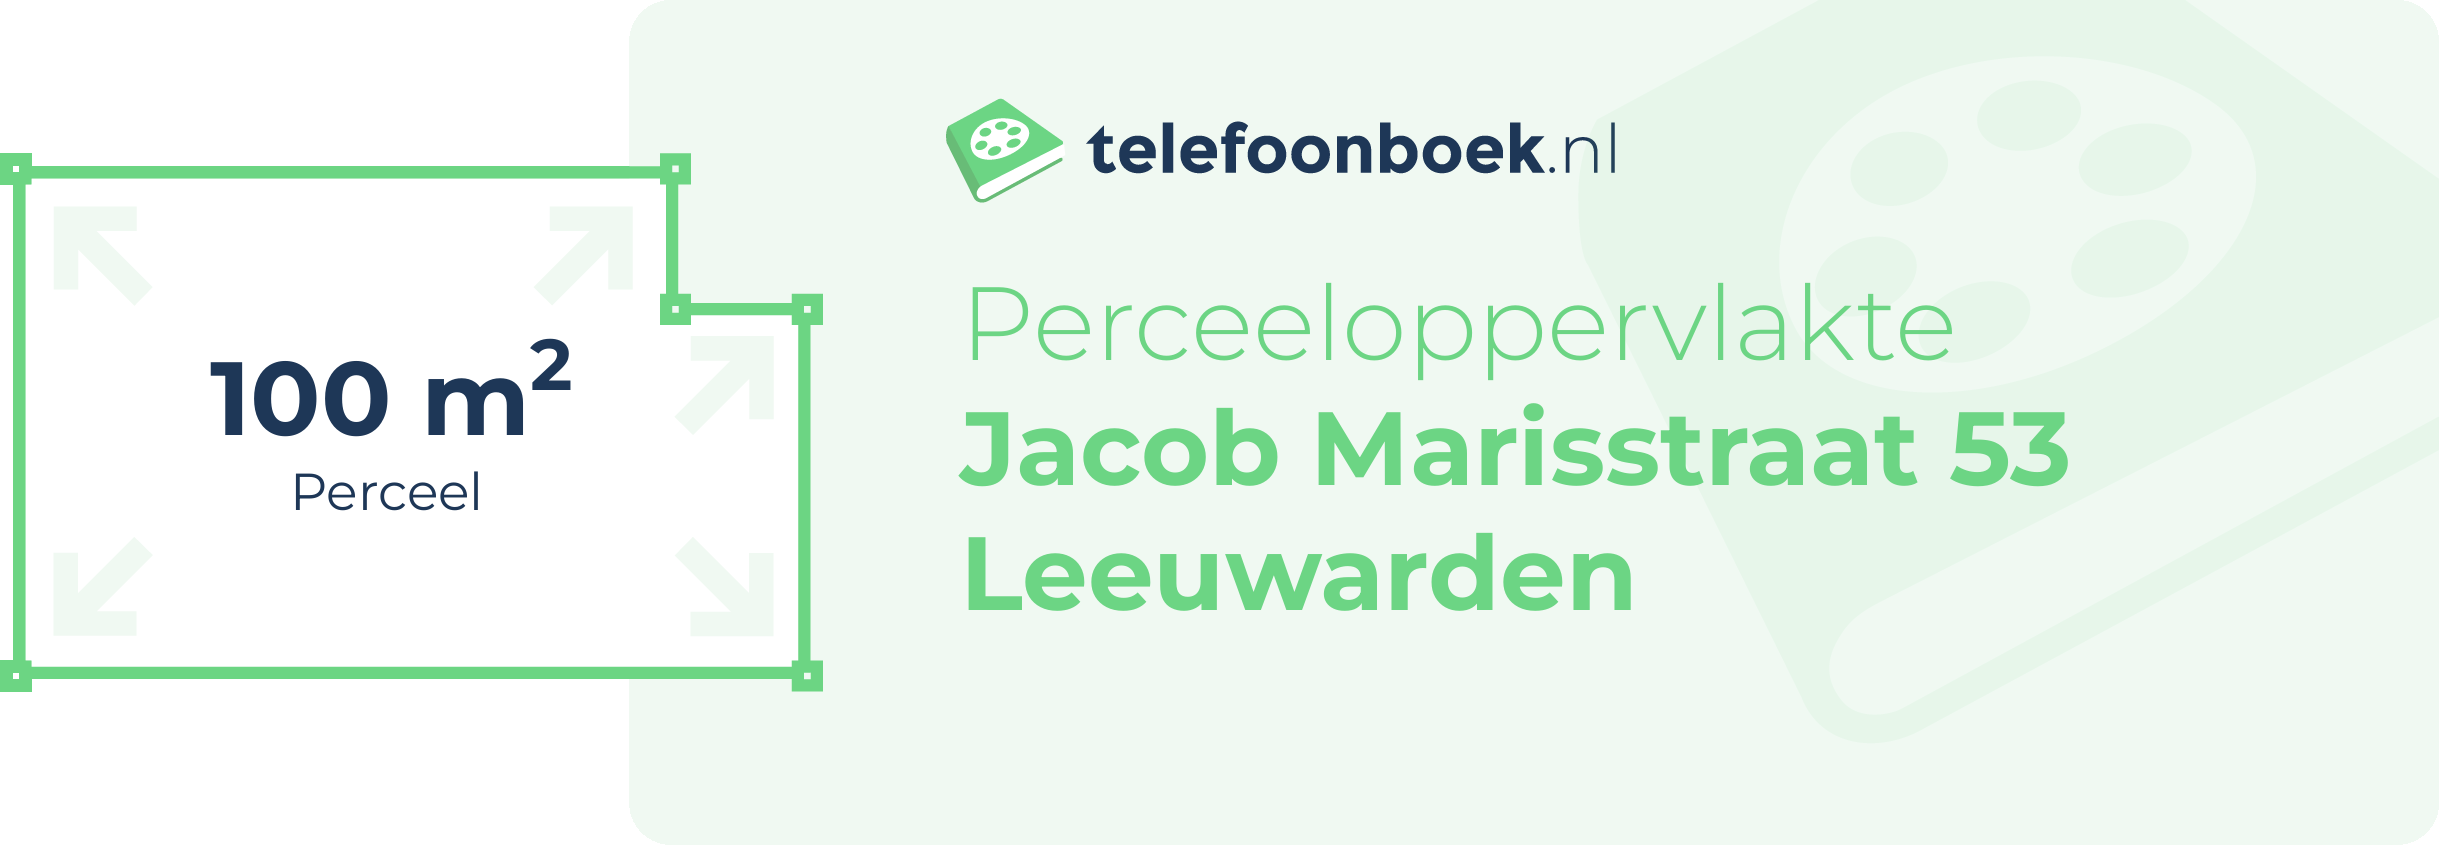 Perceeloppervlakte Jacob Marisstraat 53 Leeuwarden